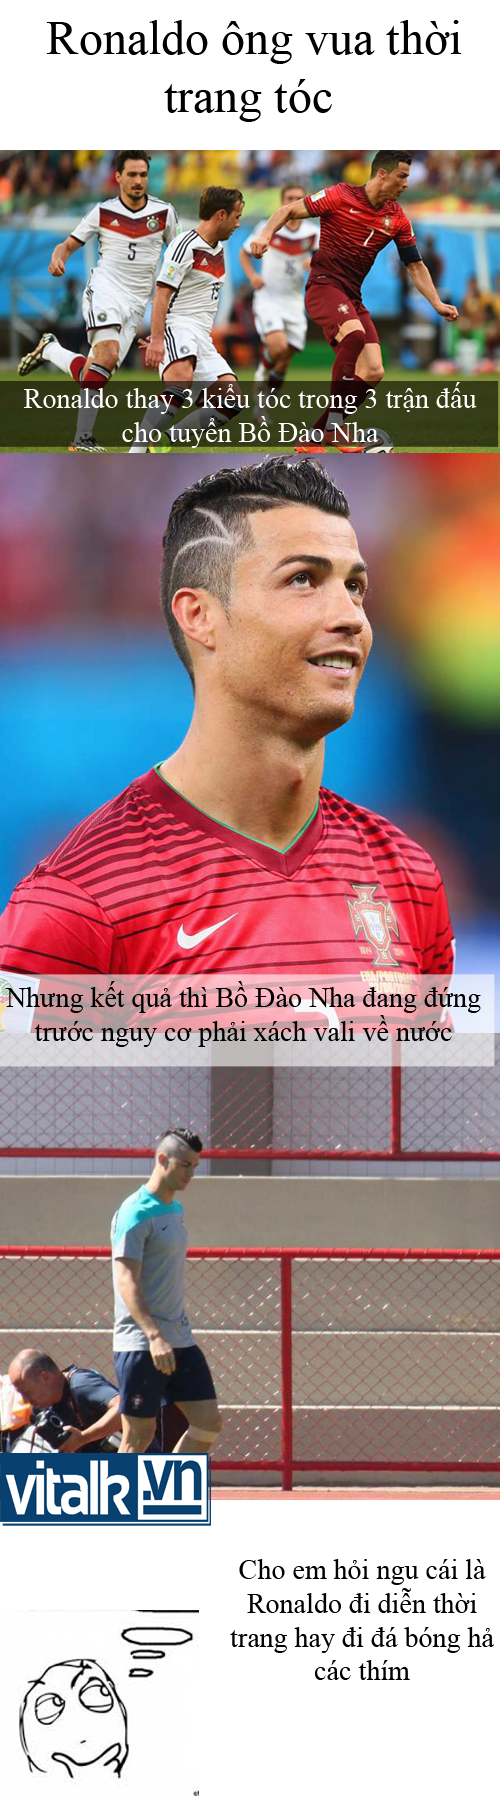 Ronaldo di dien thoi trang hay di da bong tai World Cup 2014